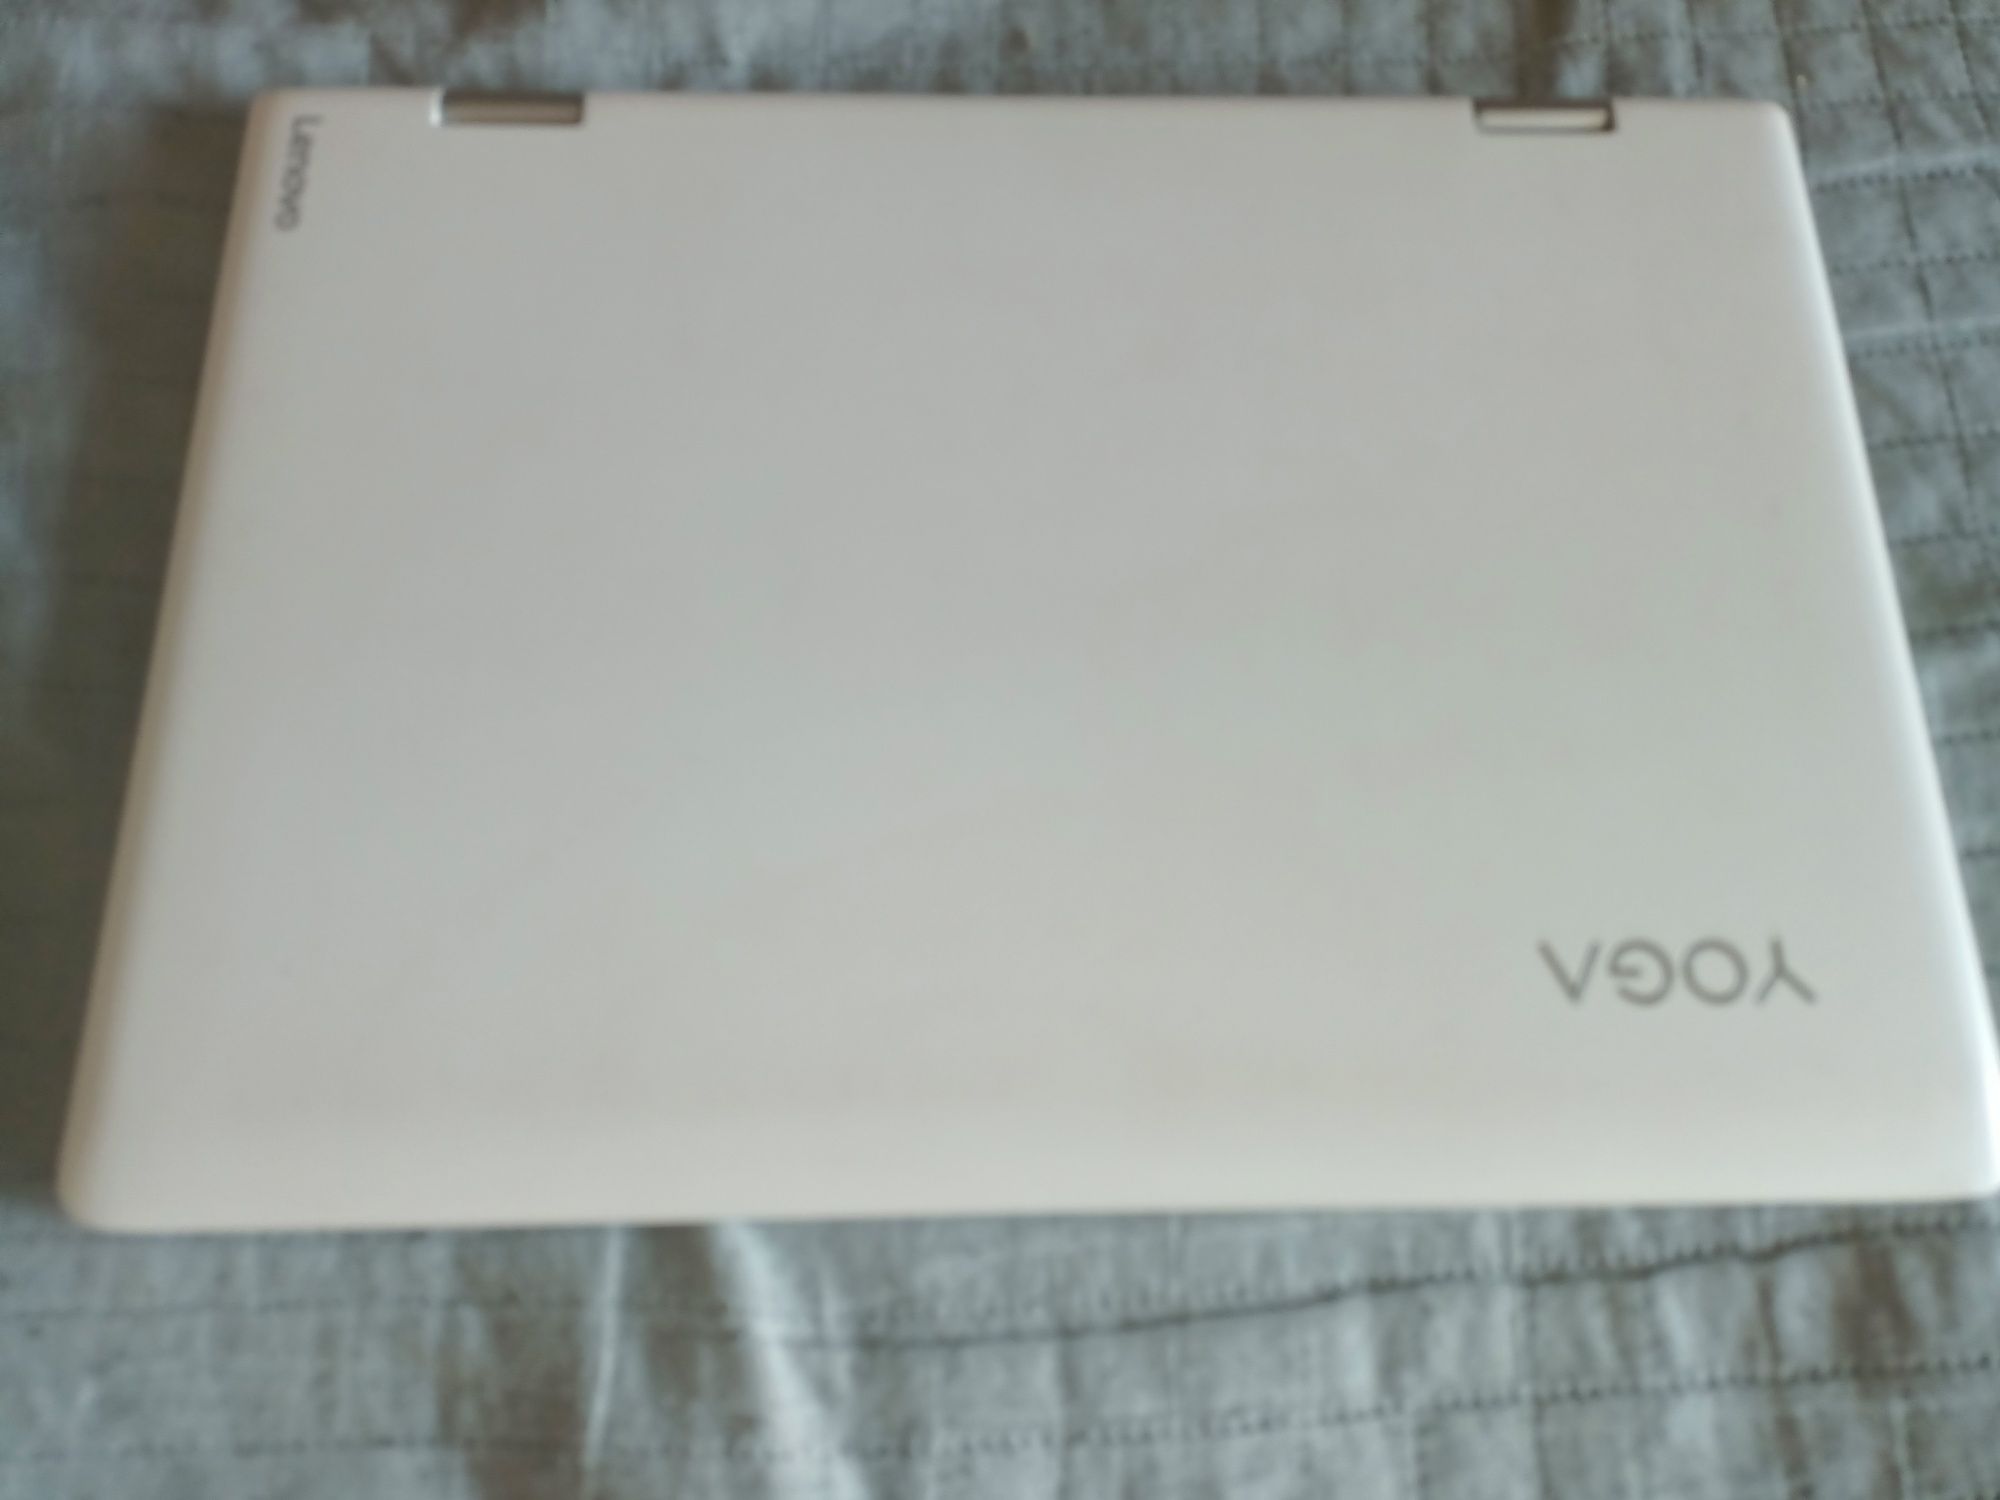 Laptop Lenovo YOGA 310-11